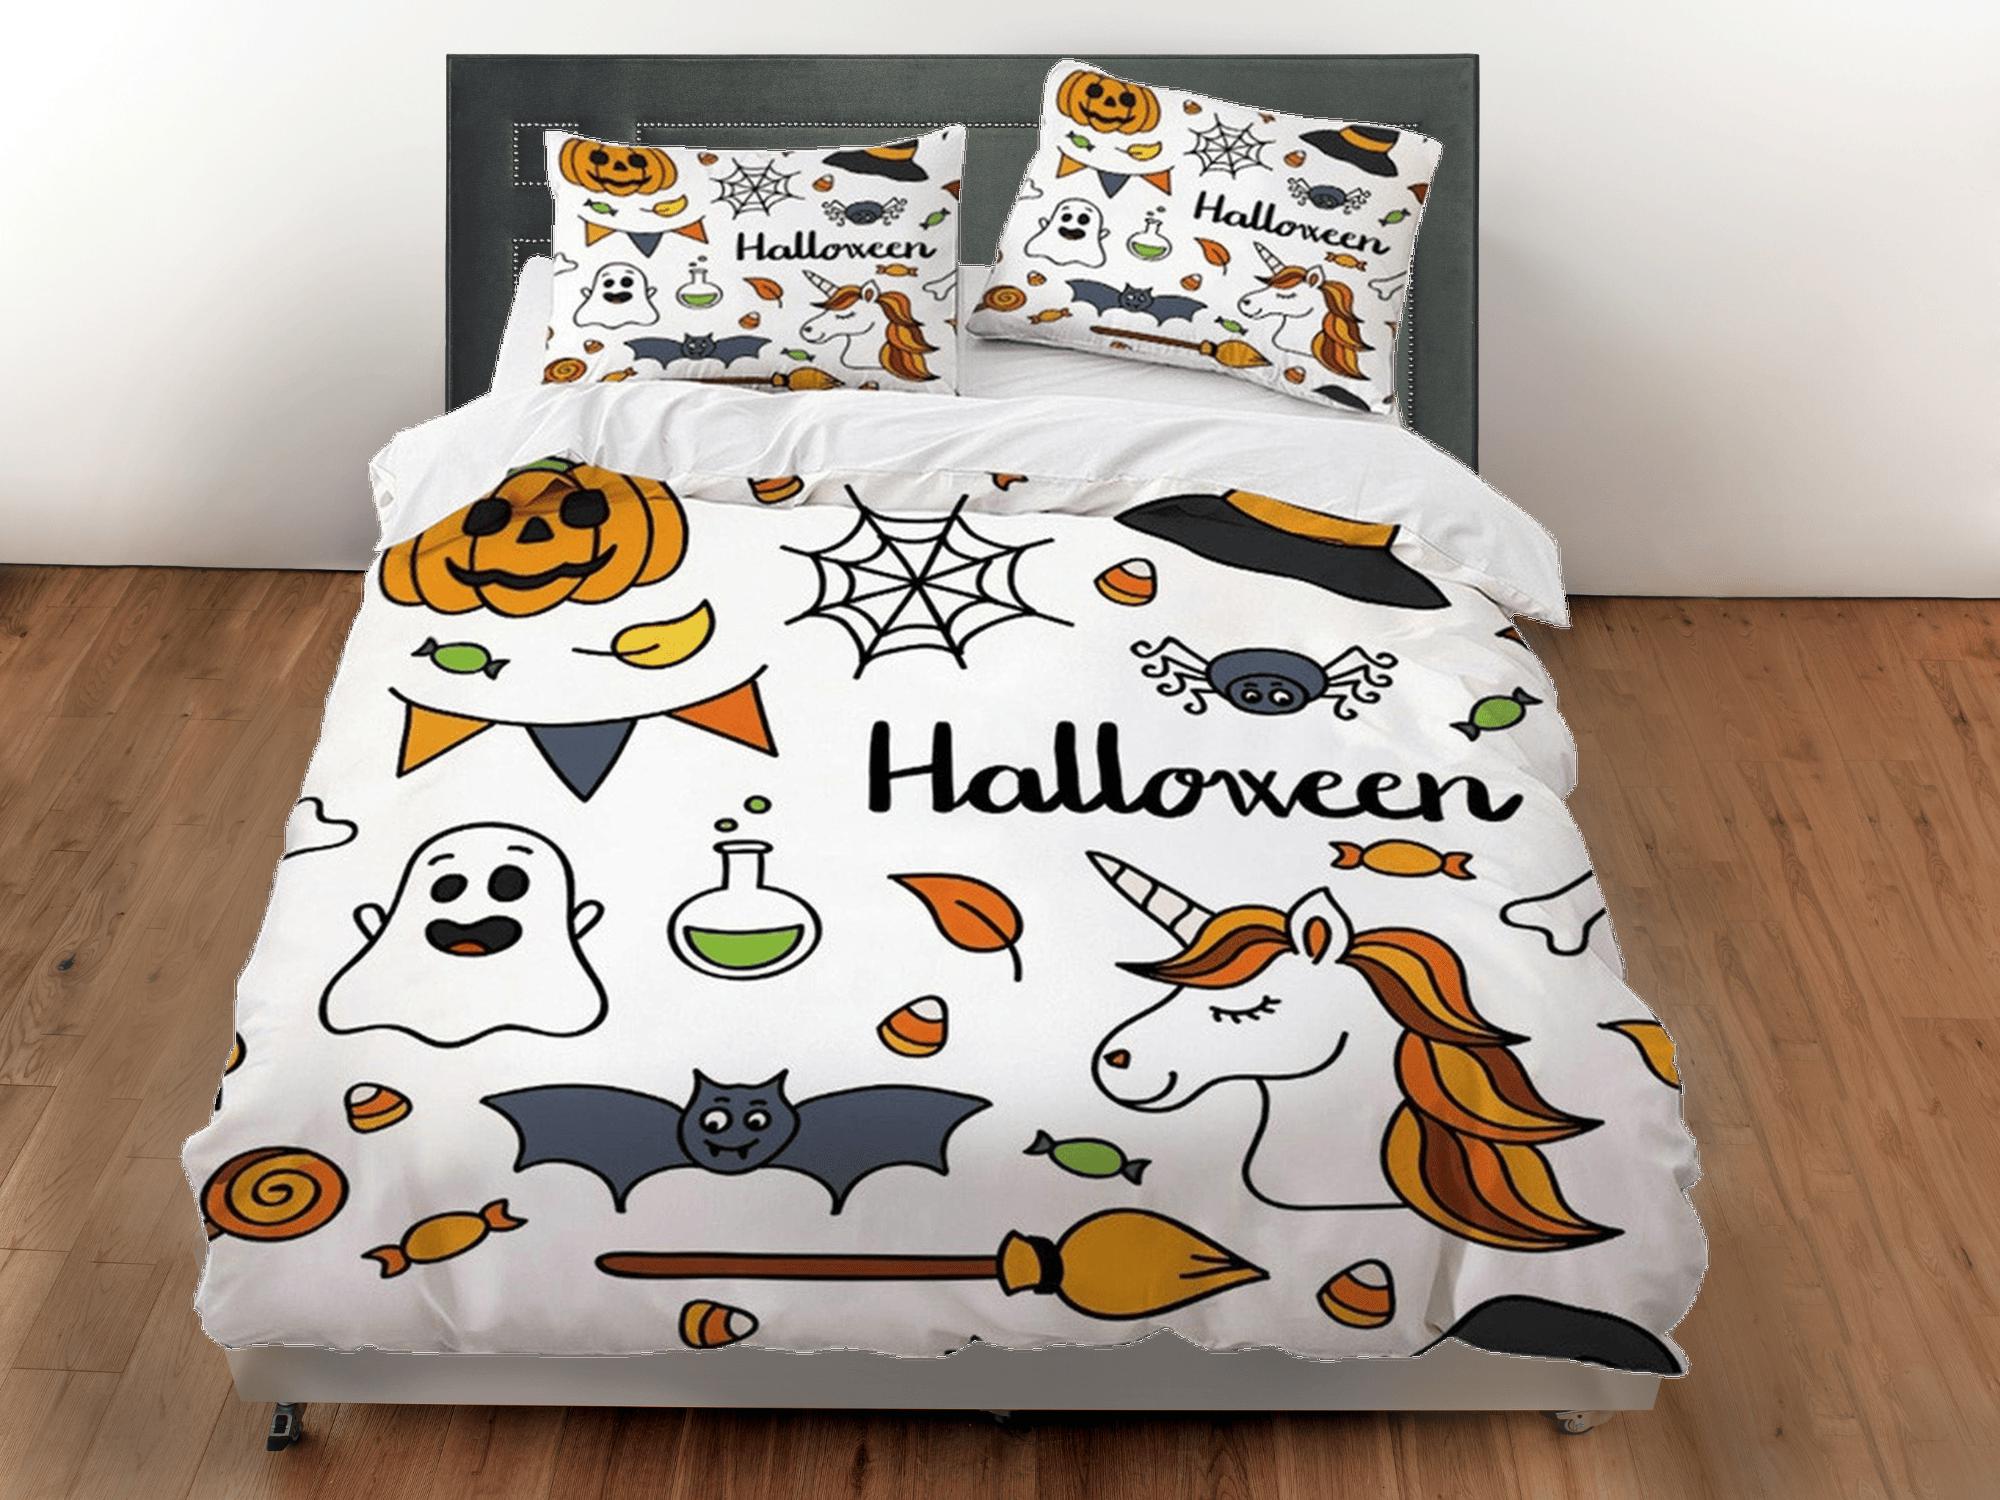 daintyduvet Ghost halloween unicorn pumpkin bedding & pillowcase, duvet cover set dorm bedding, halloween decor, nursery toddler bedding, halloween gift